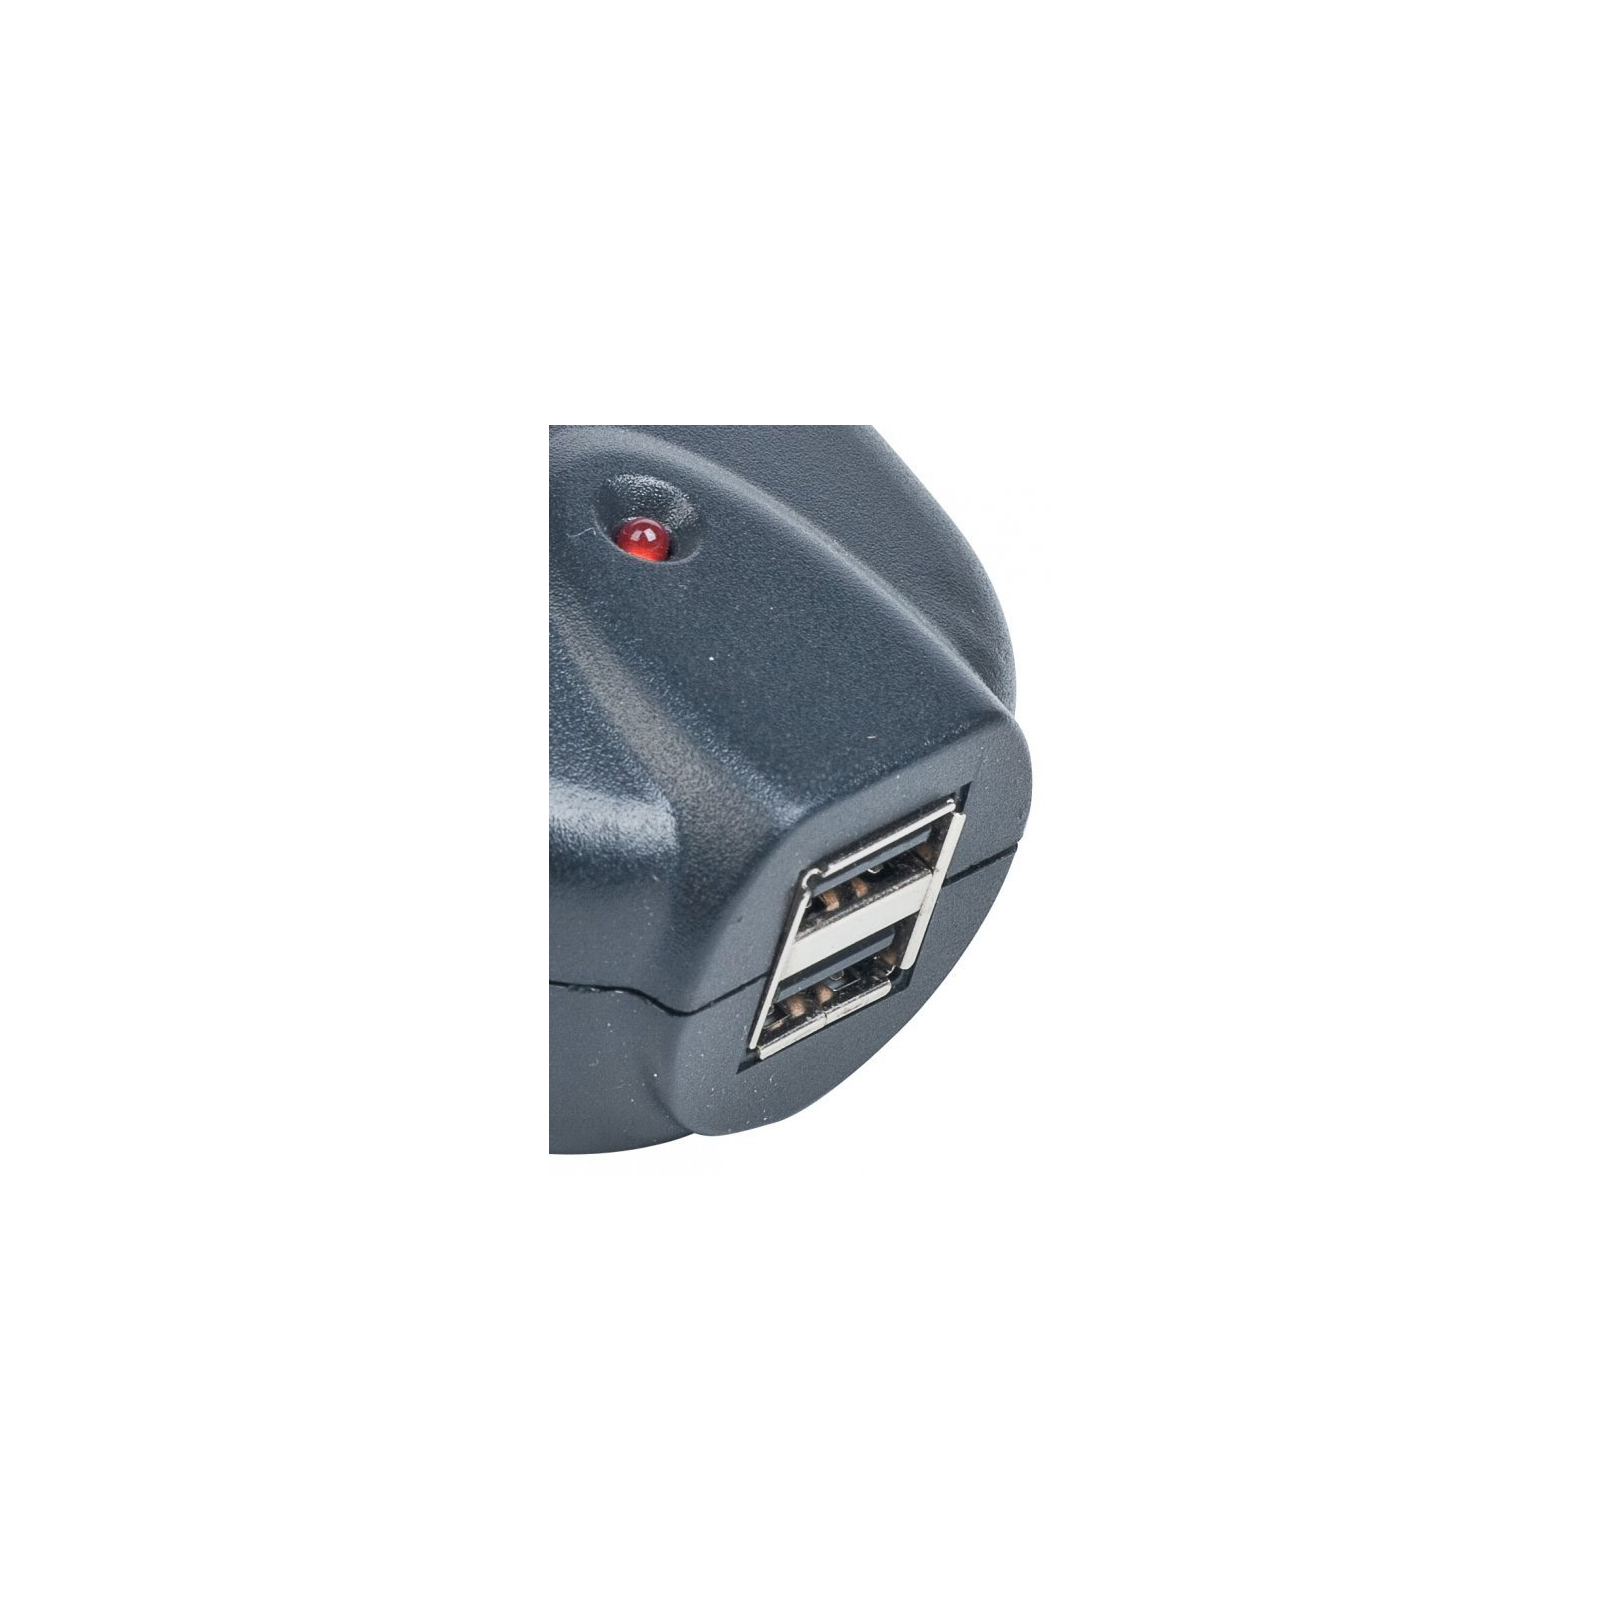 Сетевой фильтр питания EnerGenie Single AC socket Surge protected USB charger, black (SPG1-U) изображение 2